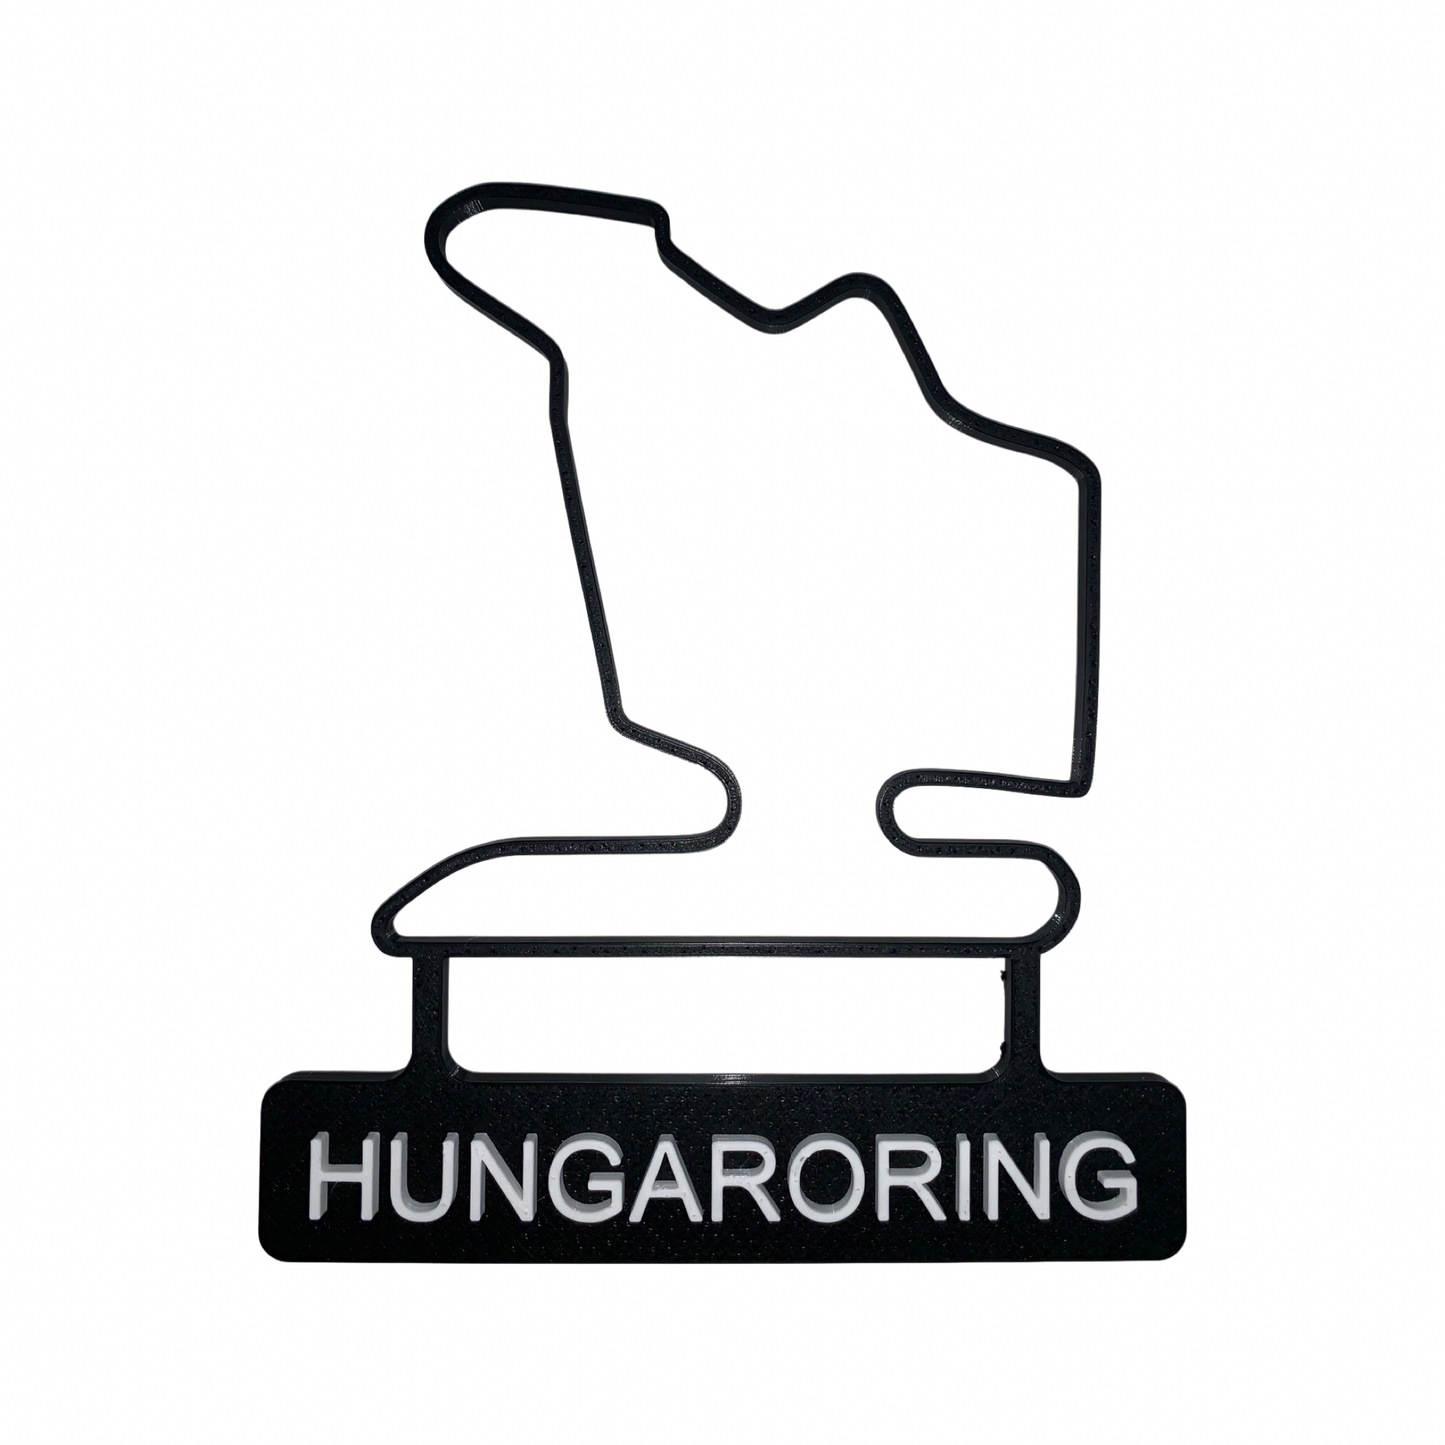 3D-gedruckte F1-Strecken Saison 2021 - Hungaroring